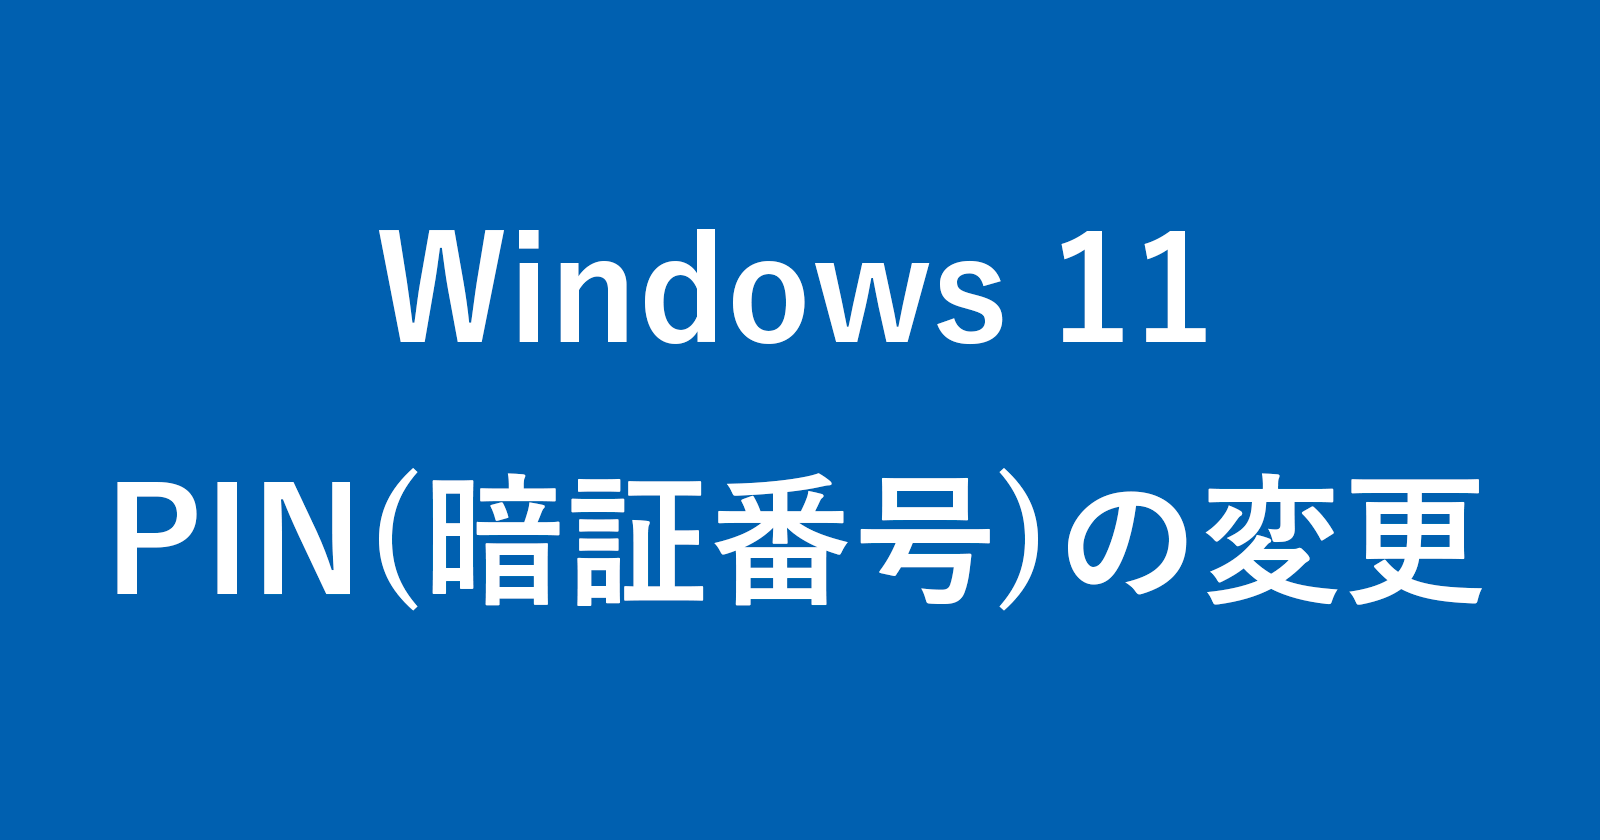 windows 11 change the pin